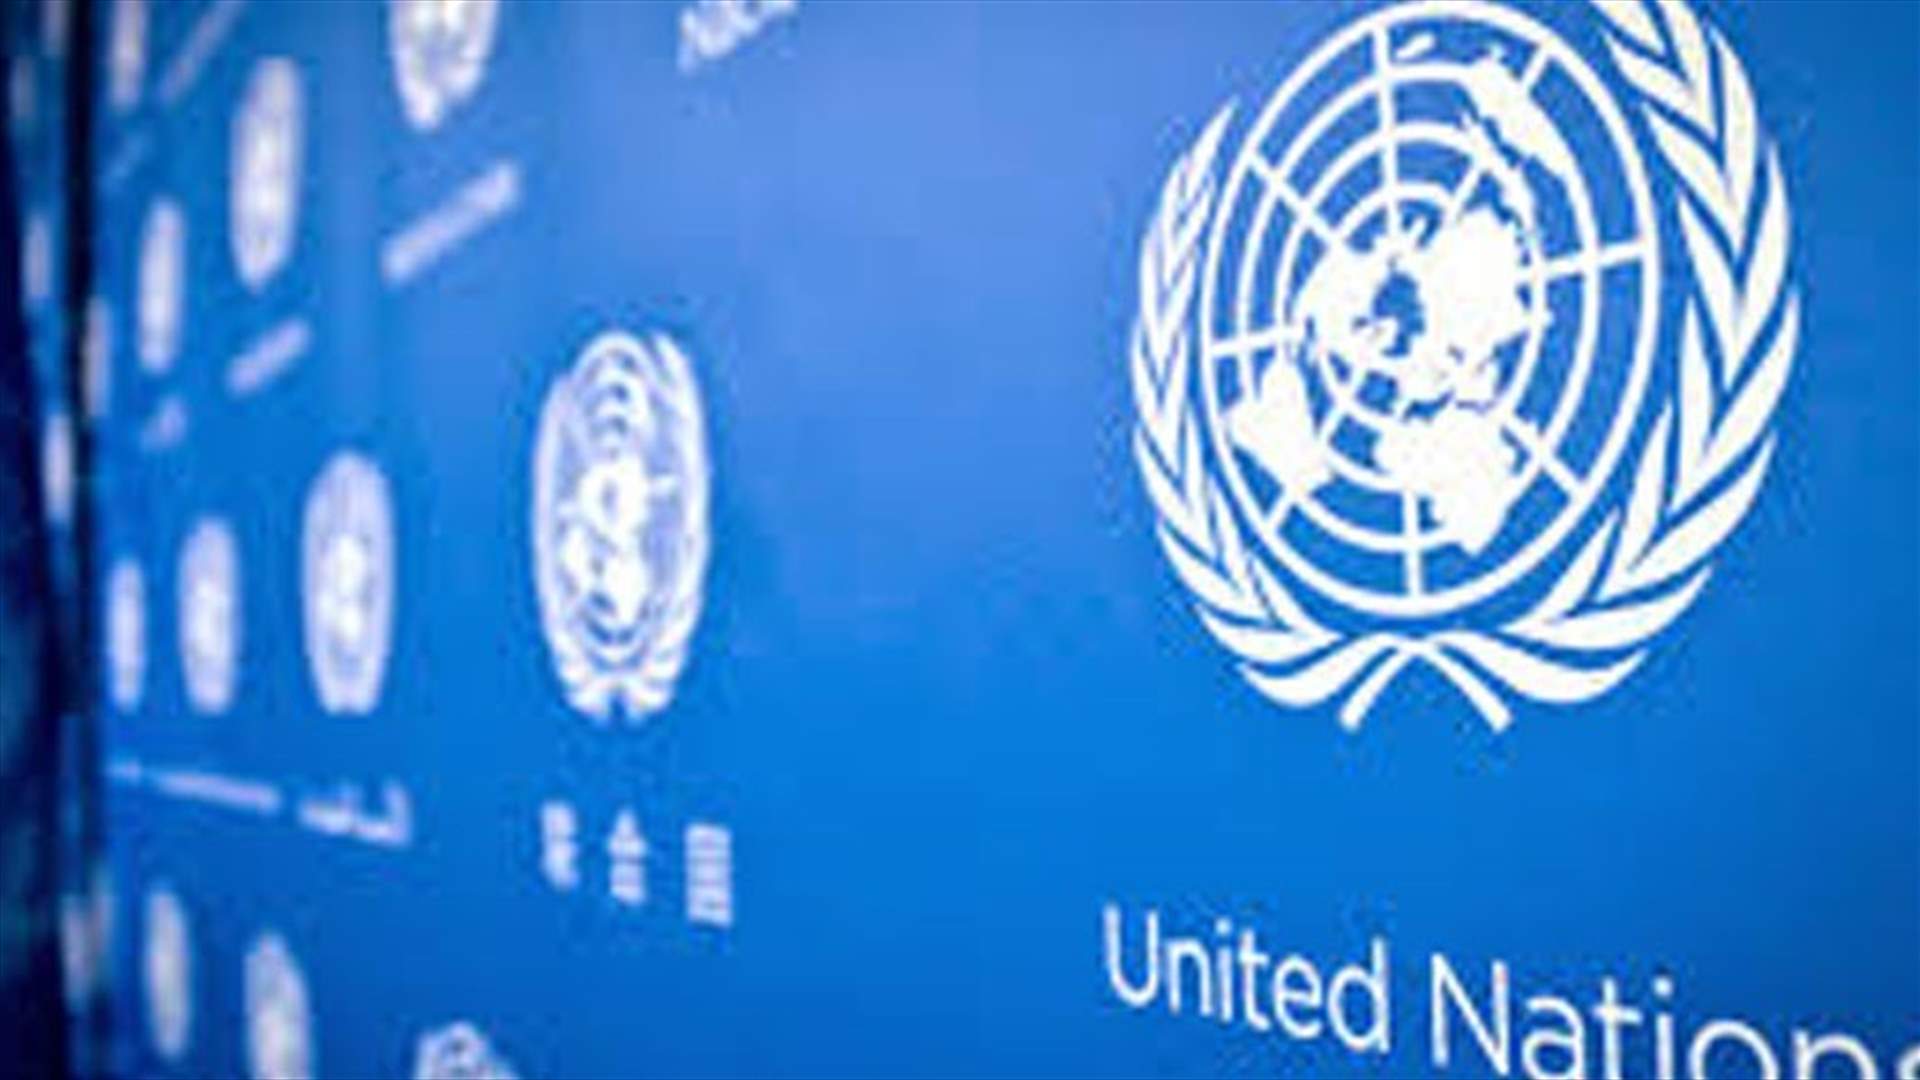 Geneva talks to encompass Syrian transition process - UN